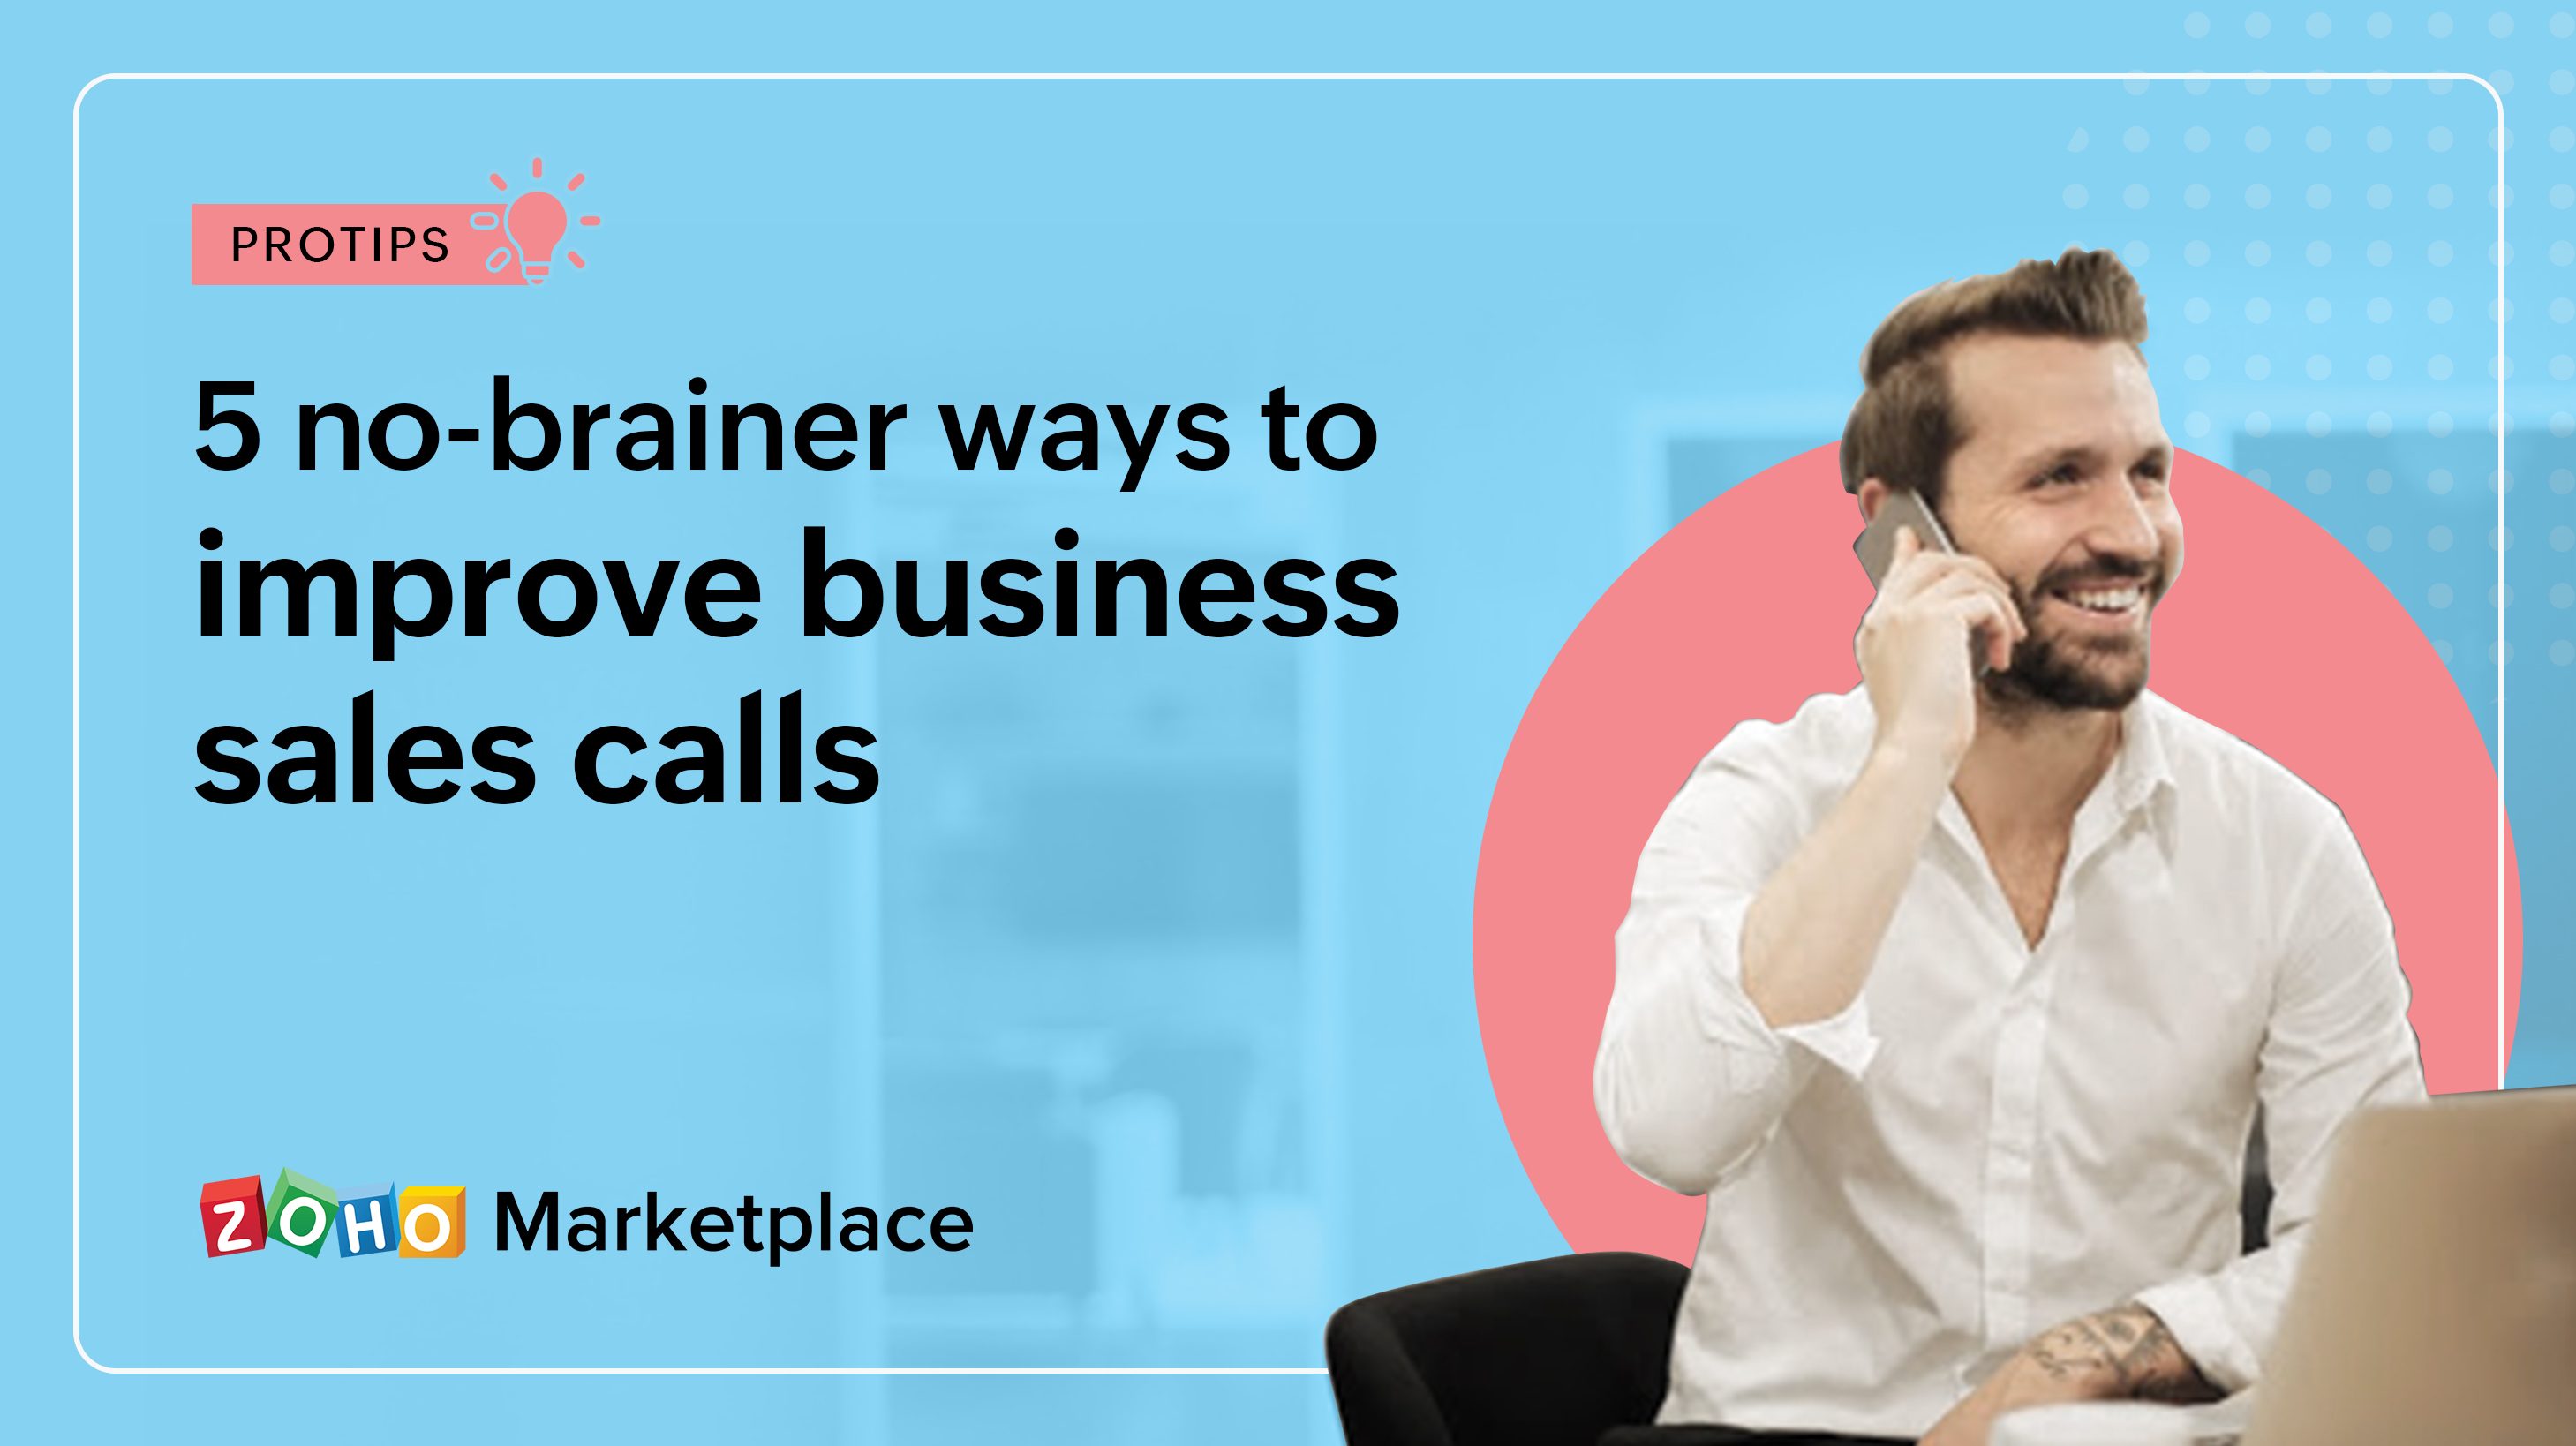 ProTips: 5 no-brainer ways to improve business sales calls